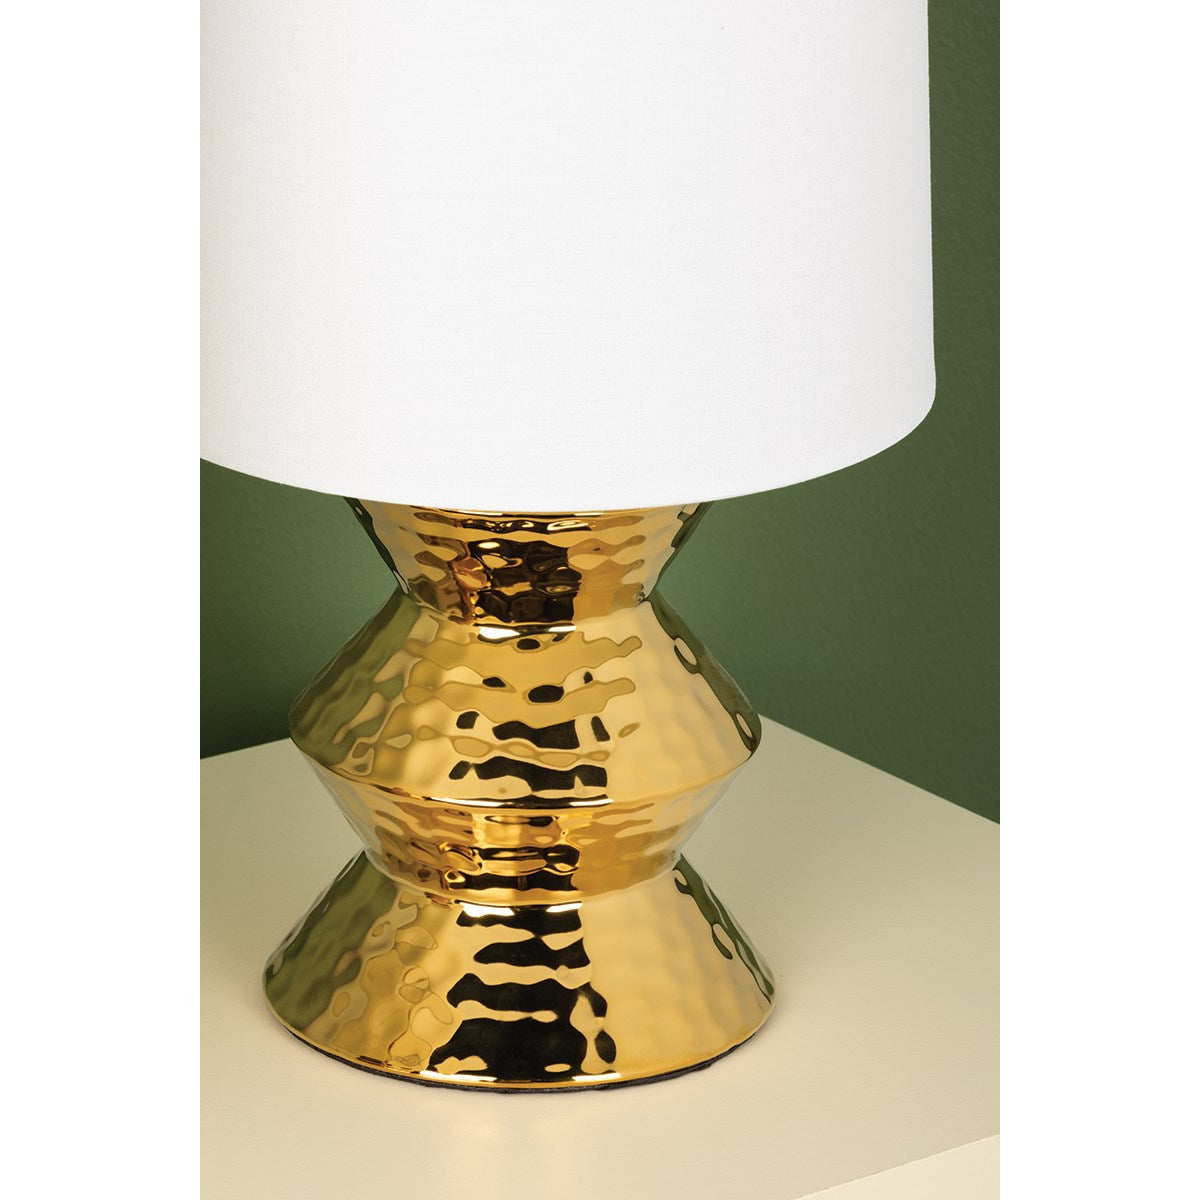 Zoe 1-Light Table Lamp